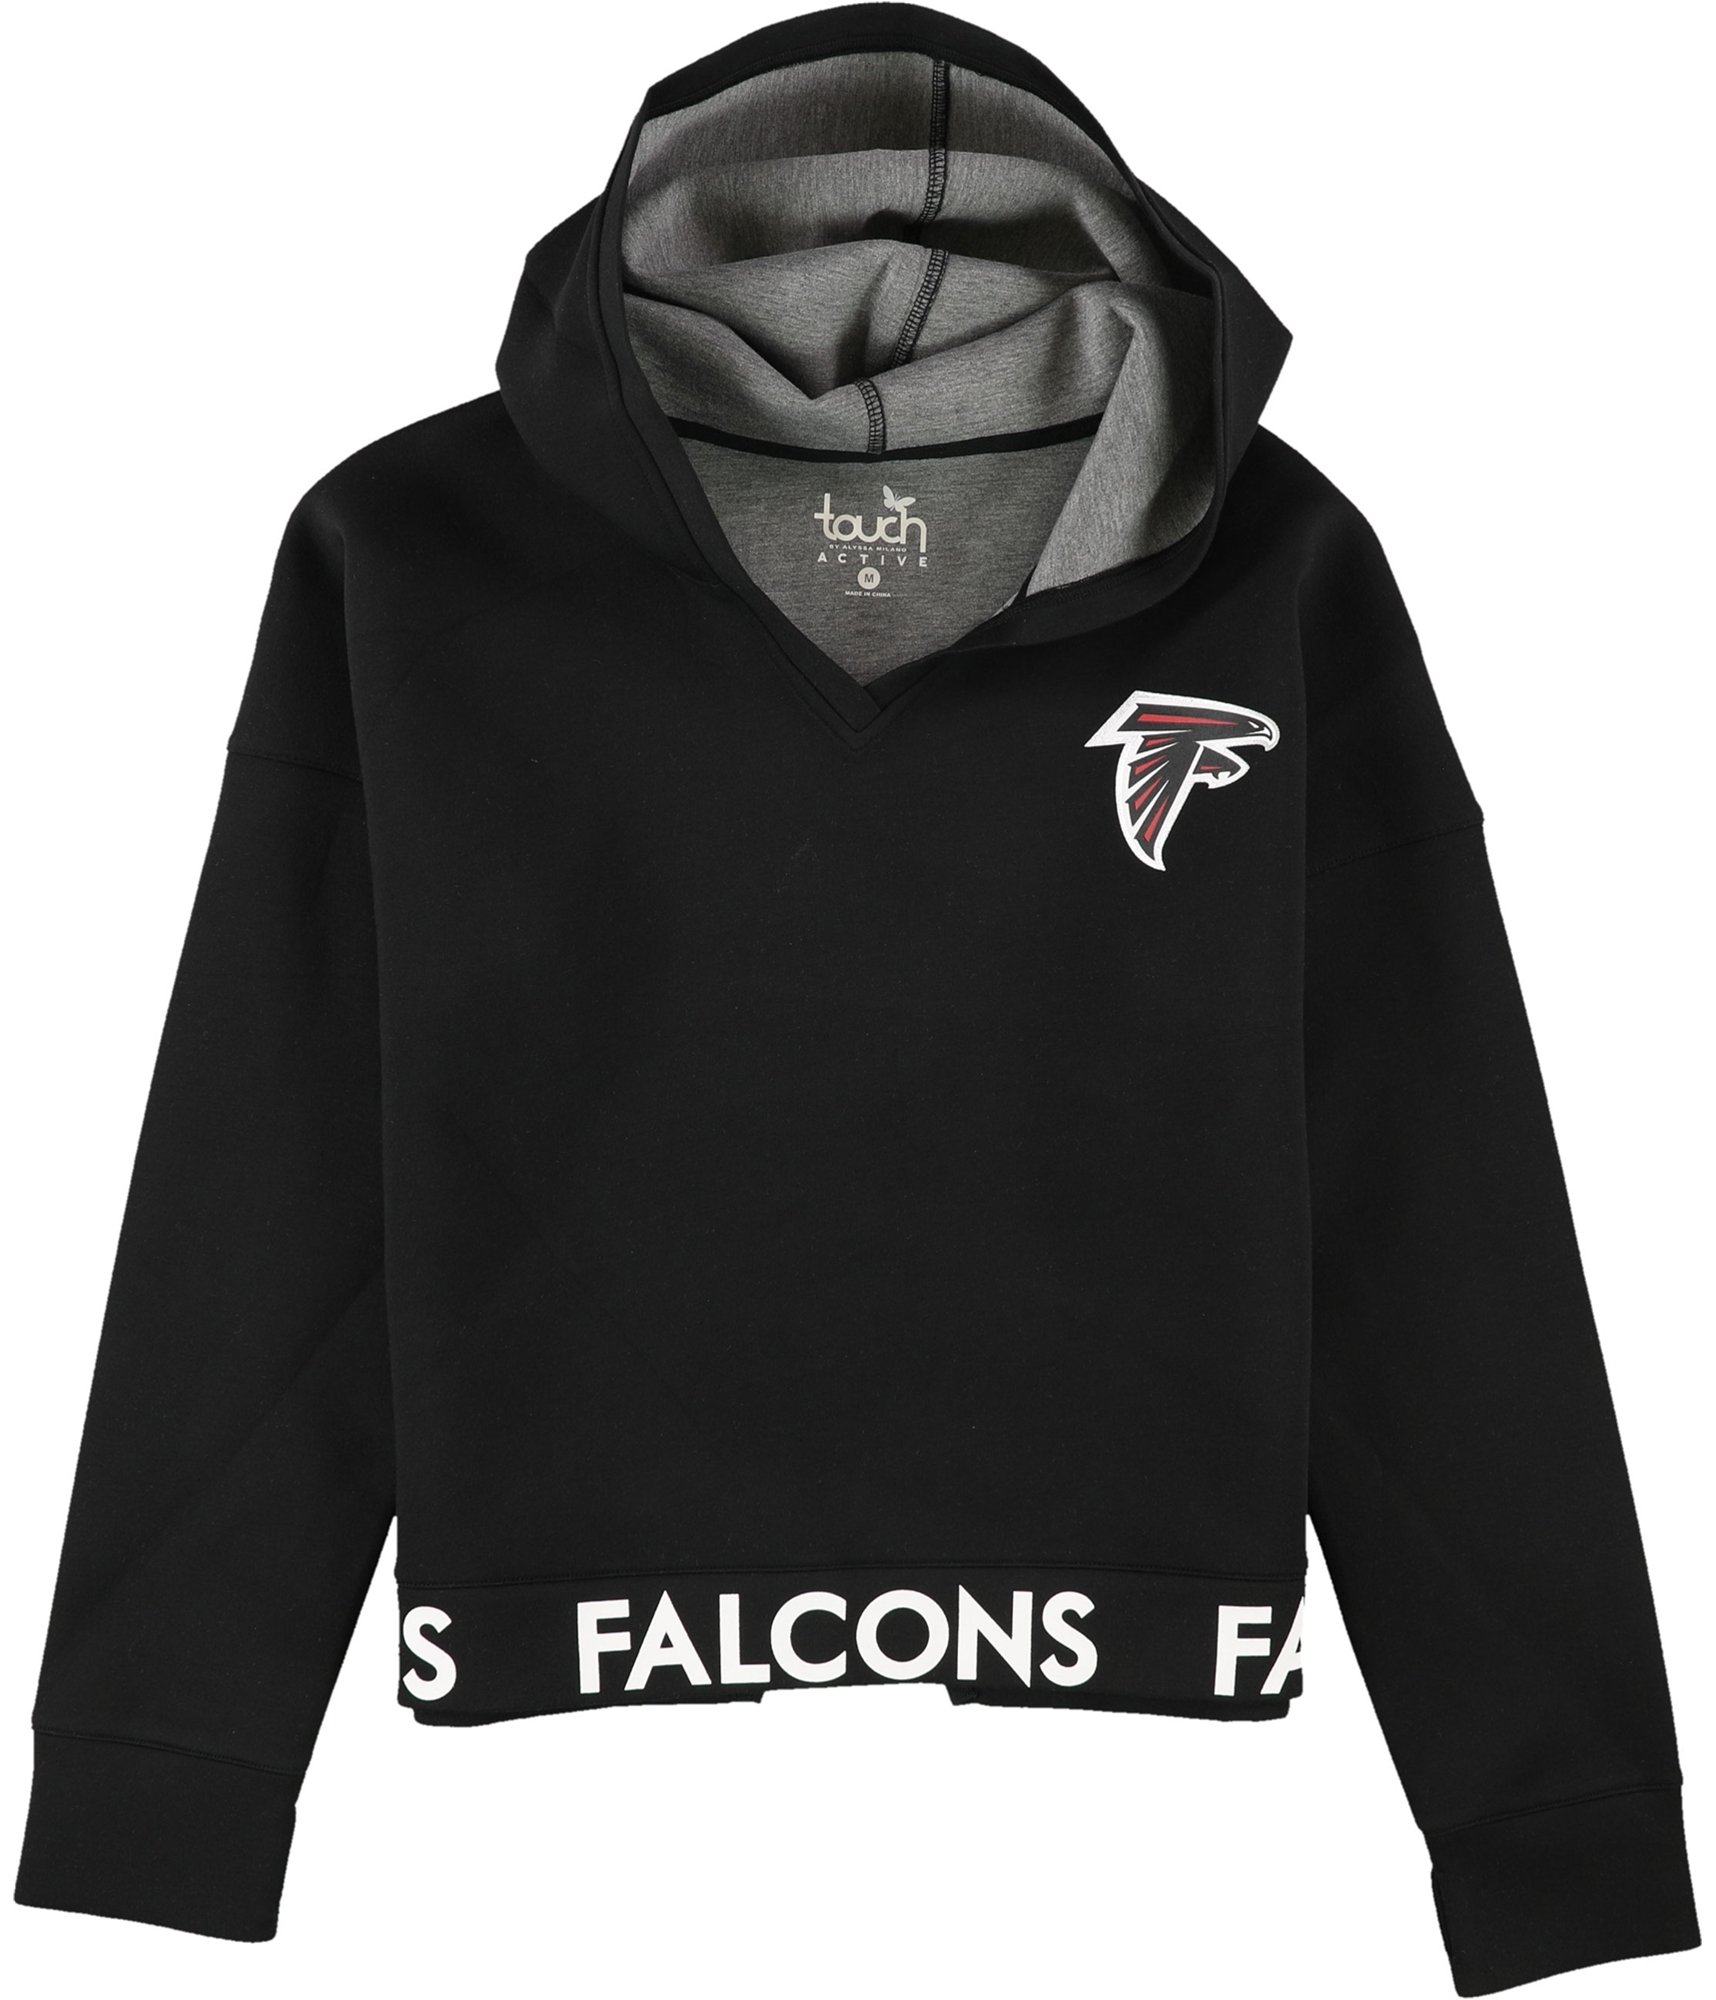 Touch Womens Atlanta Falcons Hoodie Sweatshirt, Black, Medium